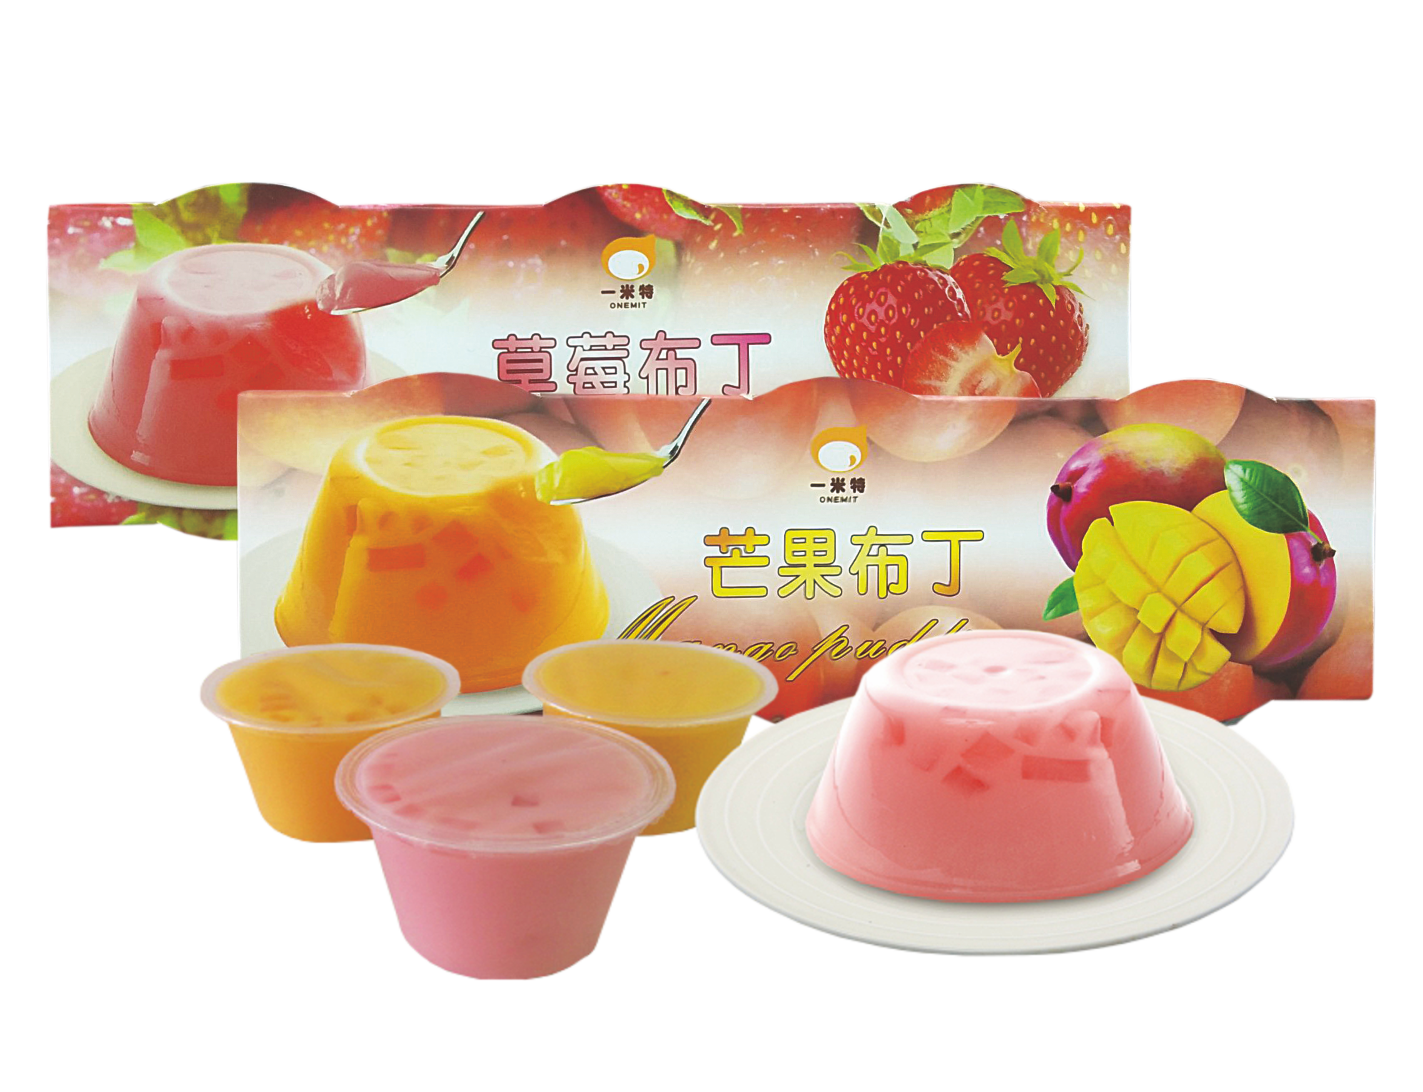 水果布丁<br>Fruit Pudding  |產品資訊|果凍/布丁